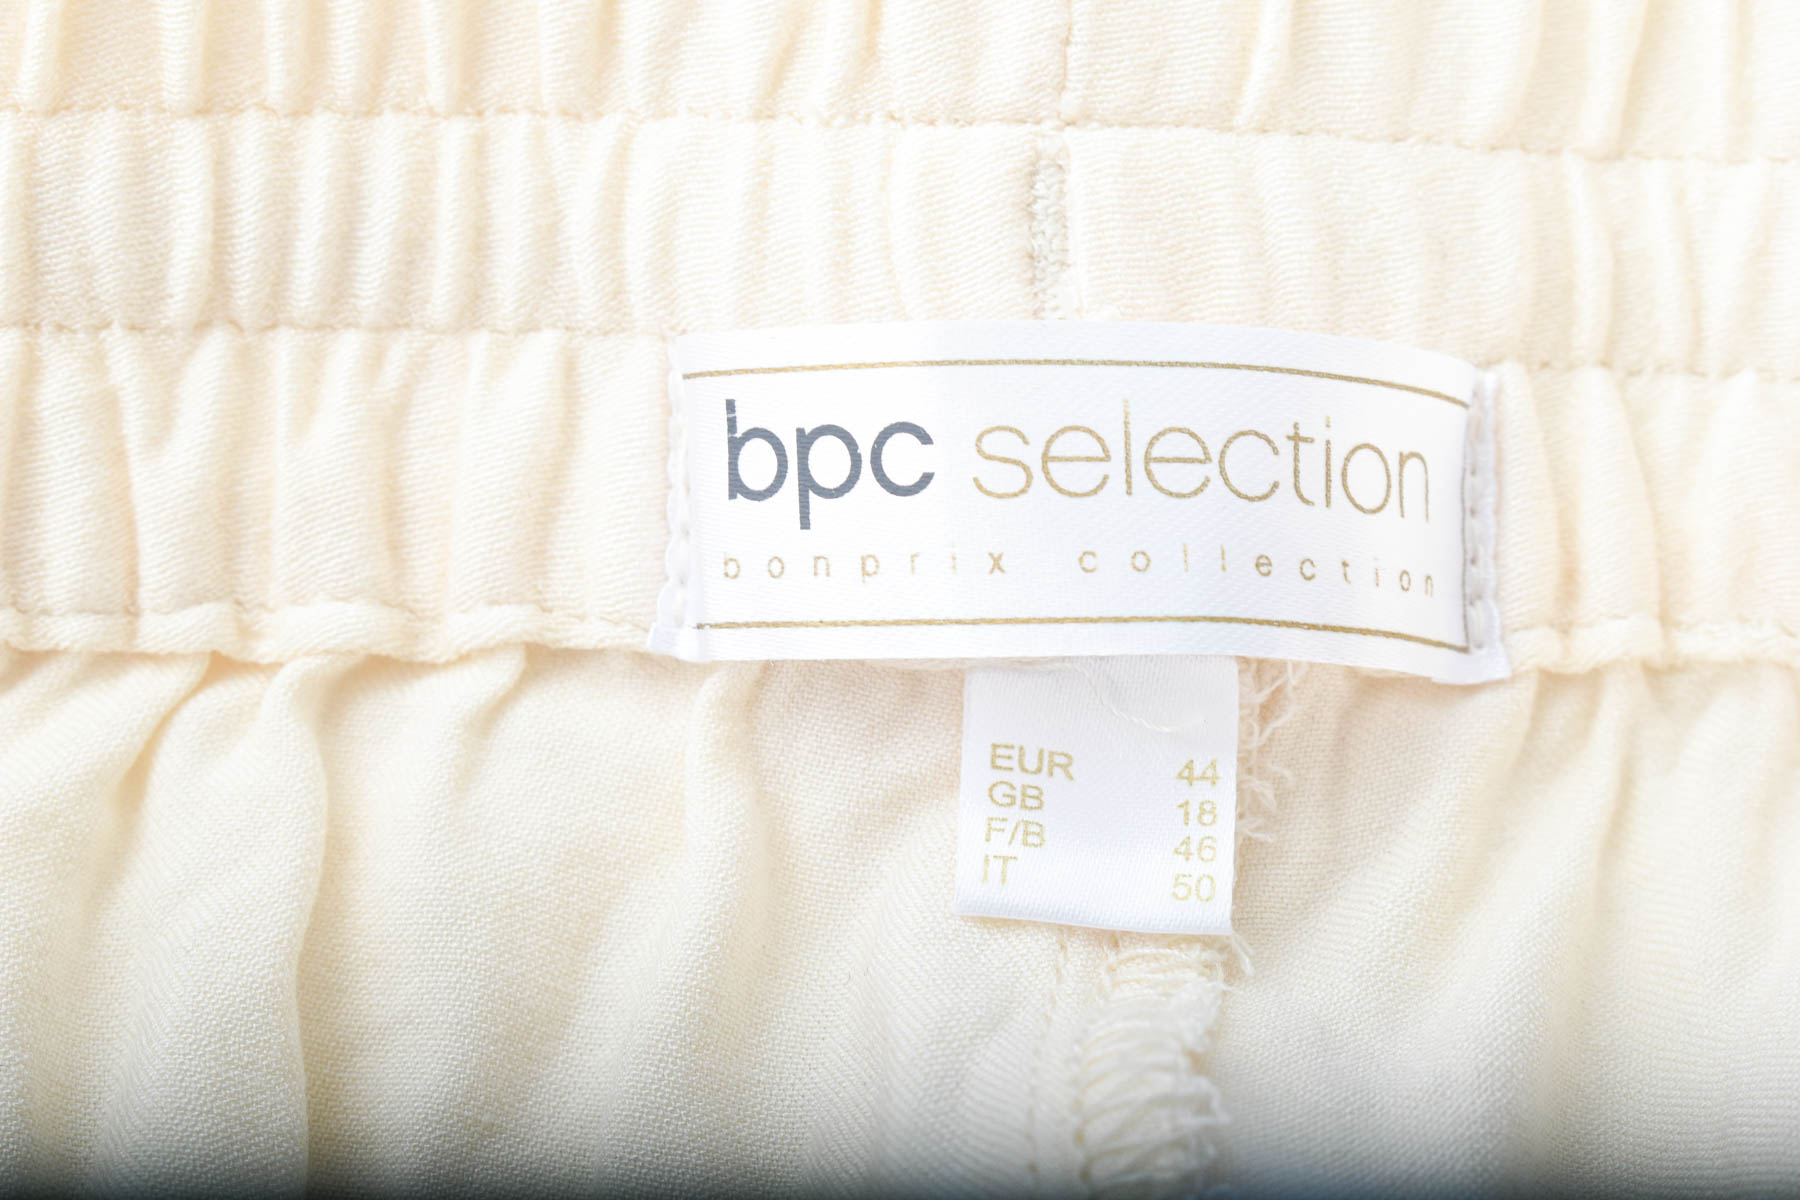 Women's trousers - Bpc selection bonprix collection - 2